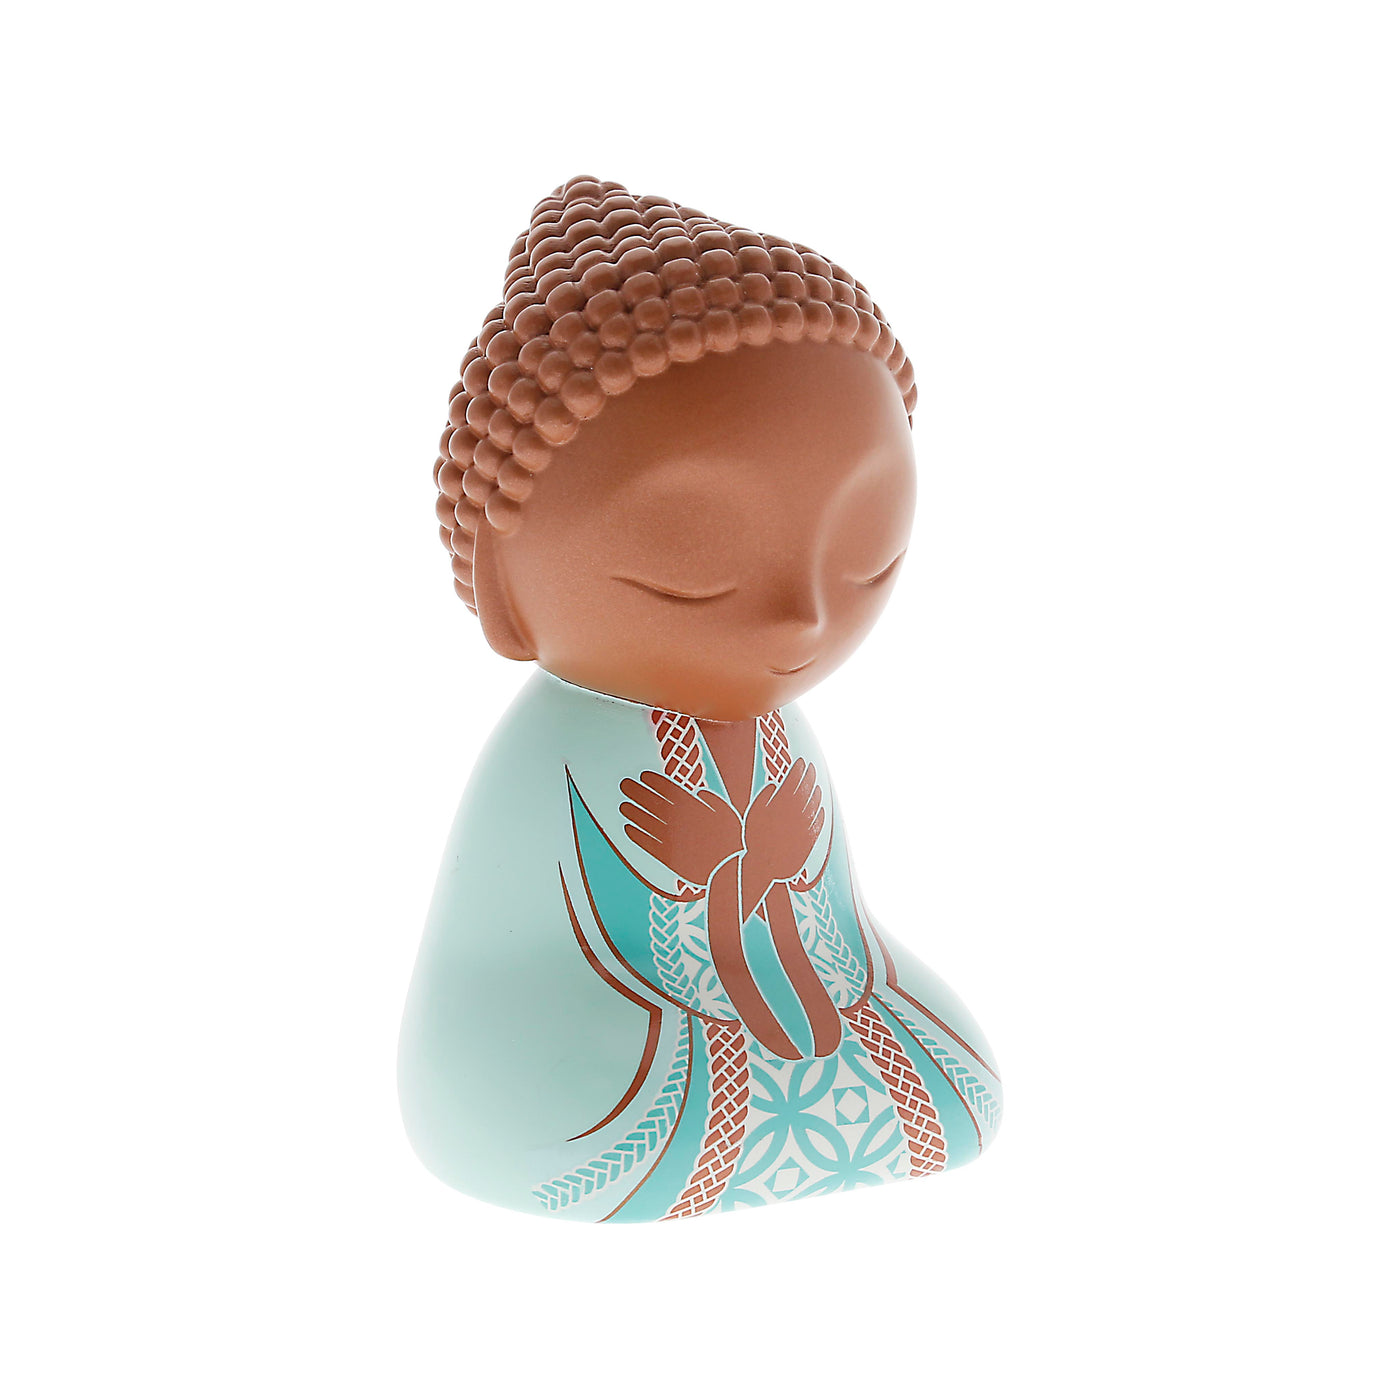 Little Buddha Figurine Be Patient - Karma Living